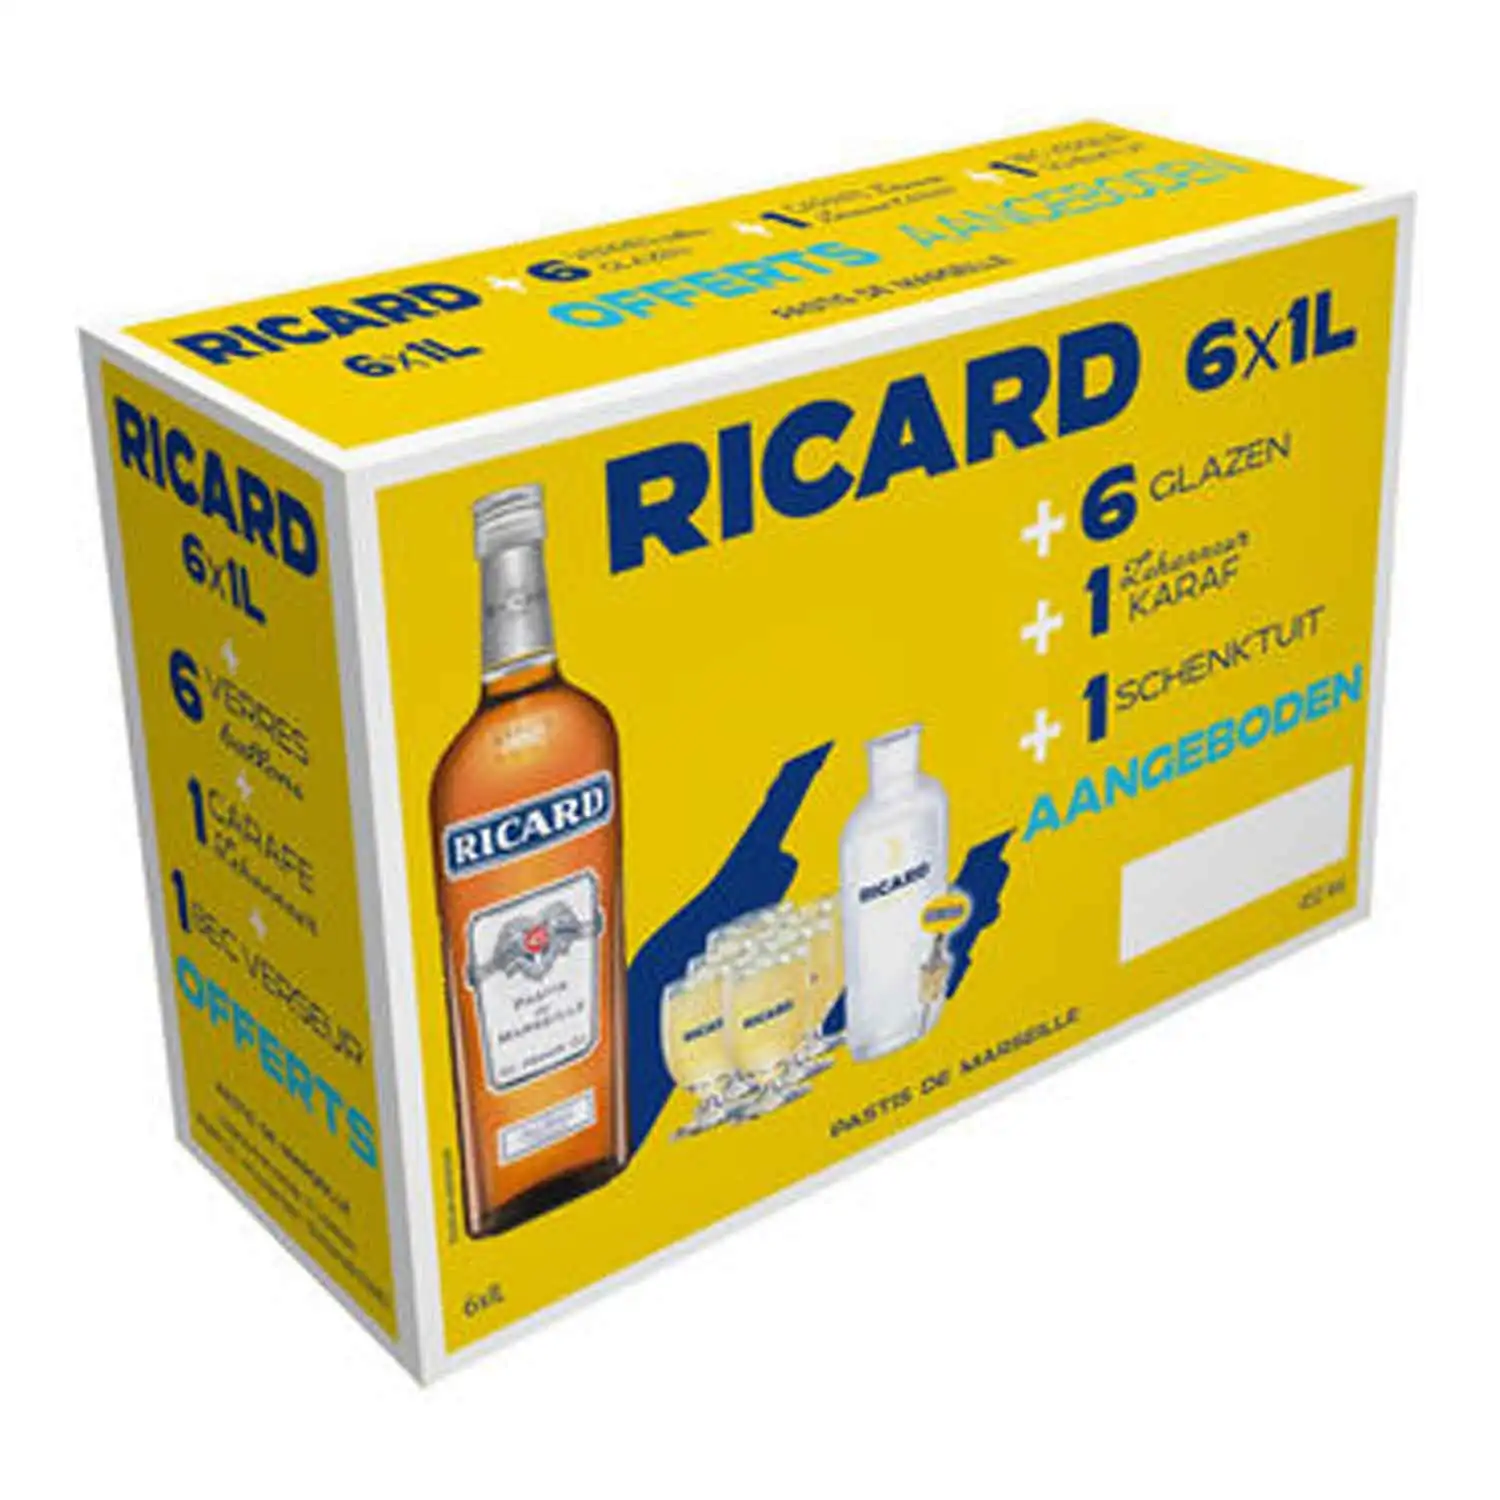 Ricard 6x1l +6 glass +1 carafe +1 drip - Buy at Real Tobacco